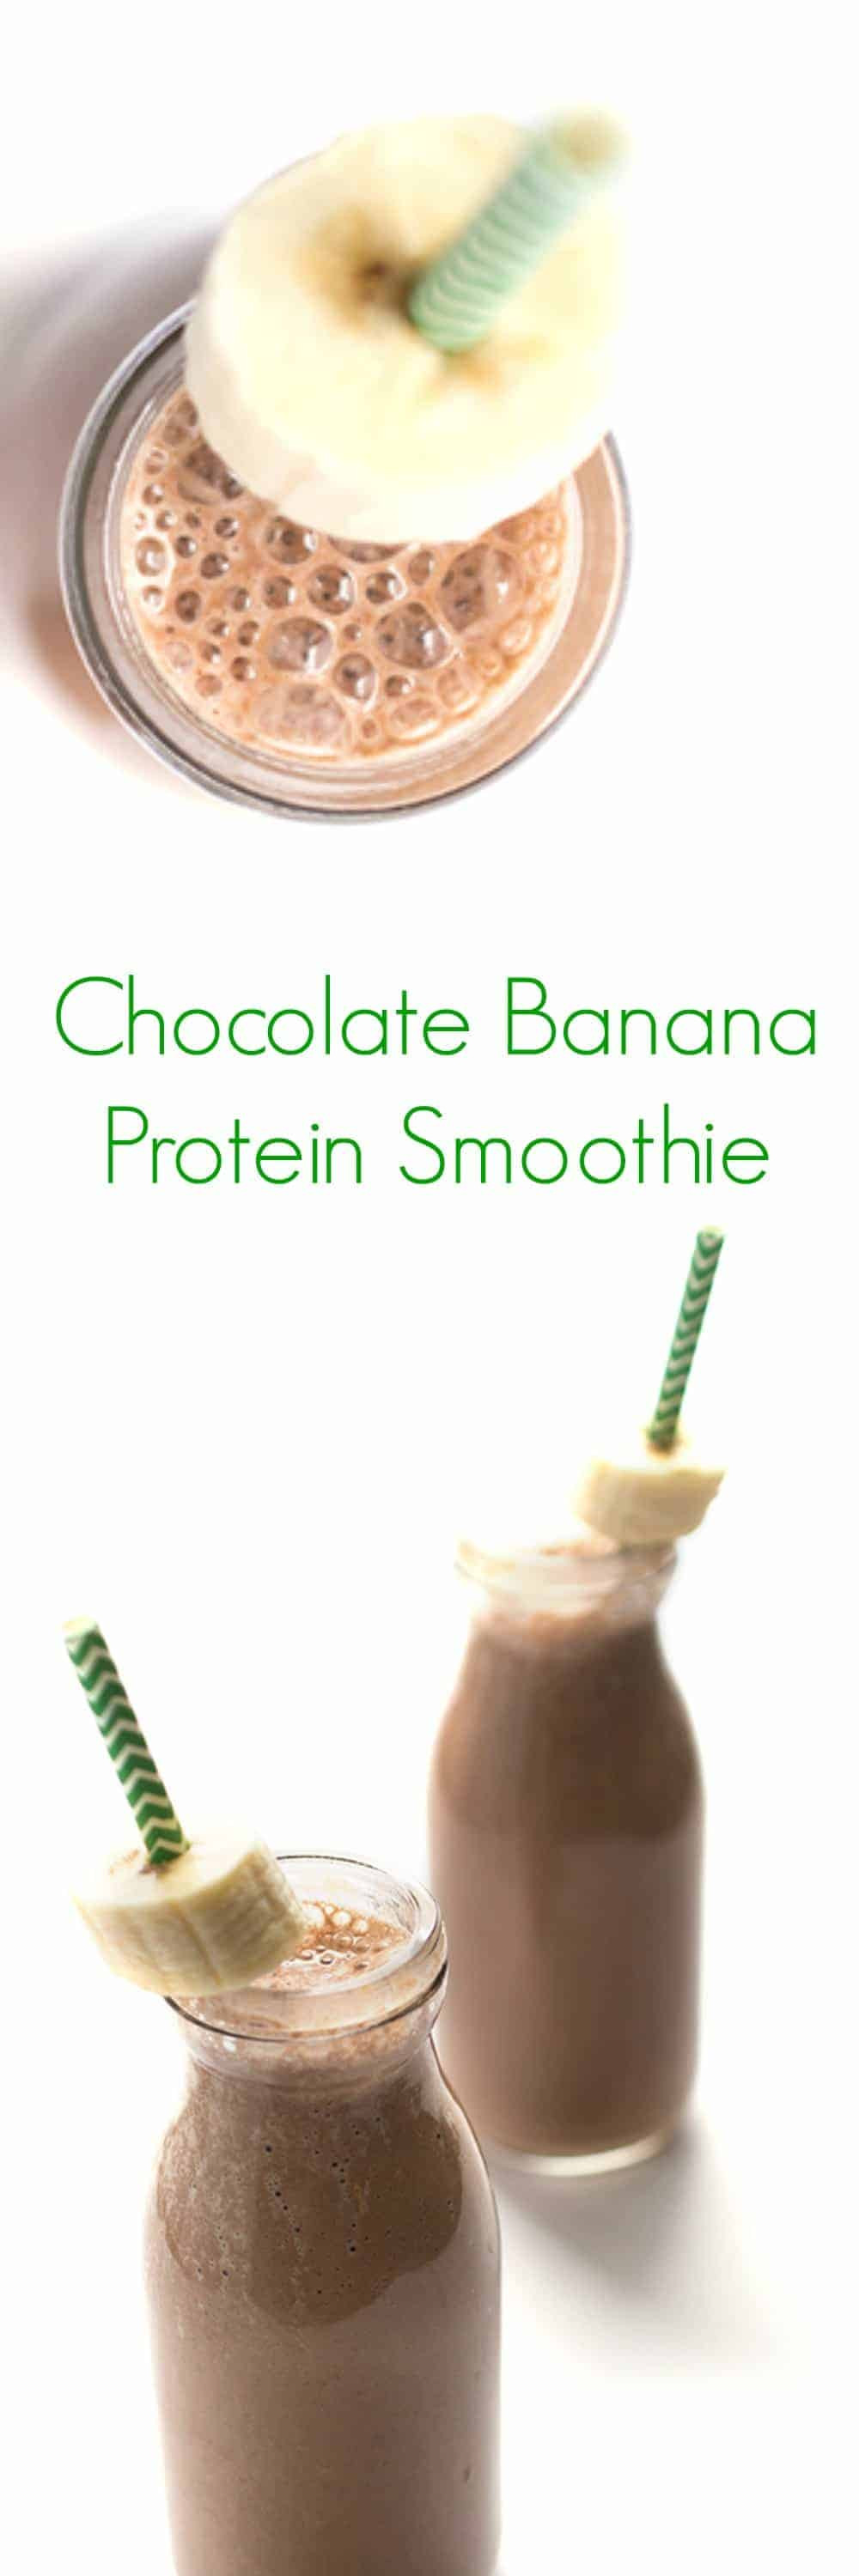 Healthy Protein Smoothie Recipes
 Chocolate Banana Protein Smoothie The Lemon Bowl